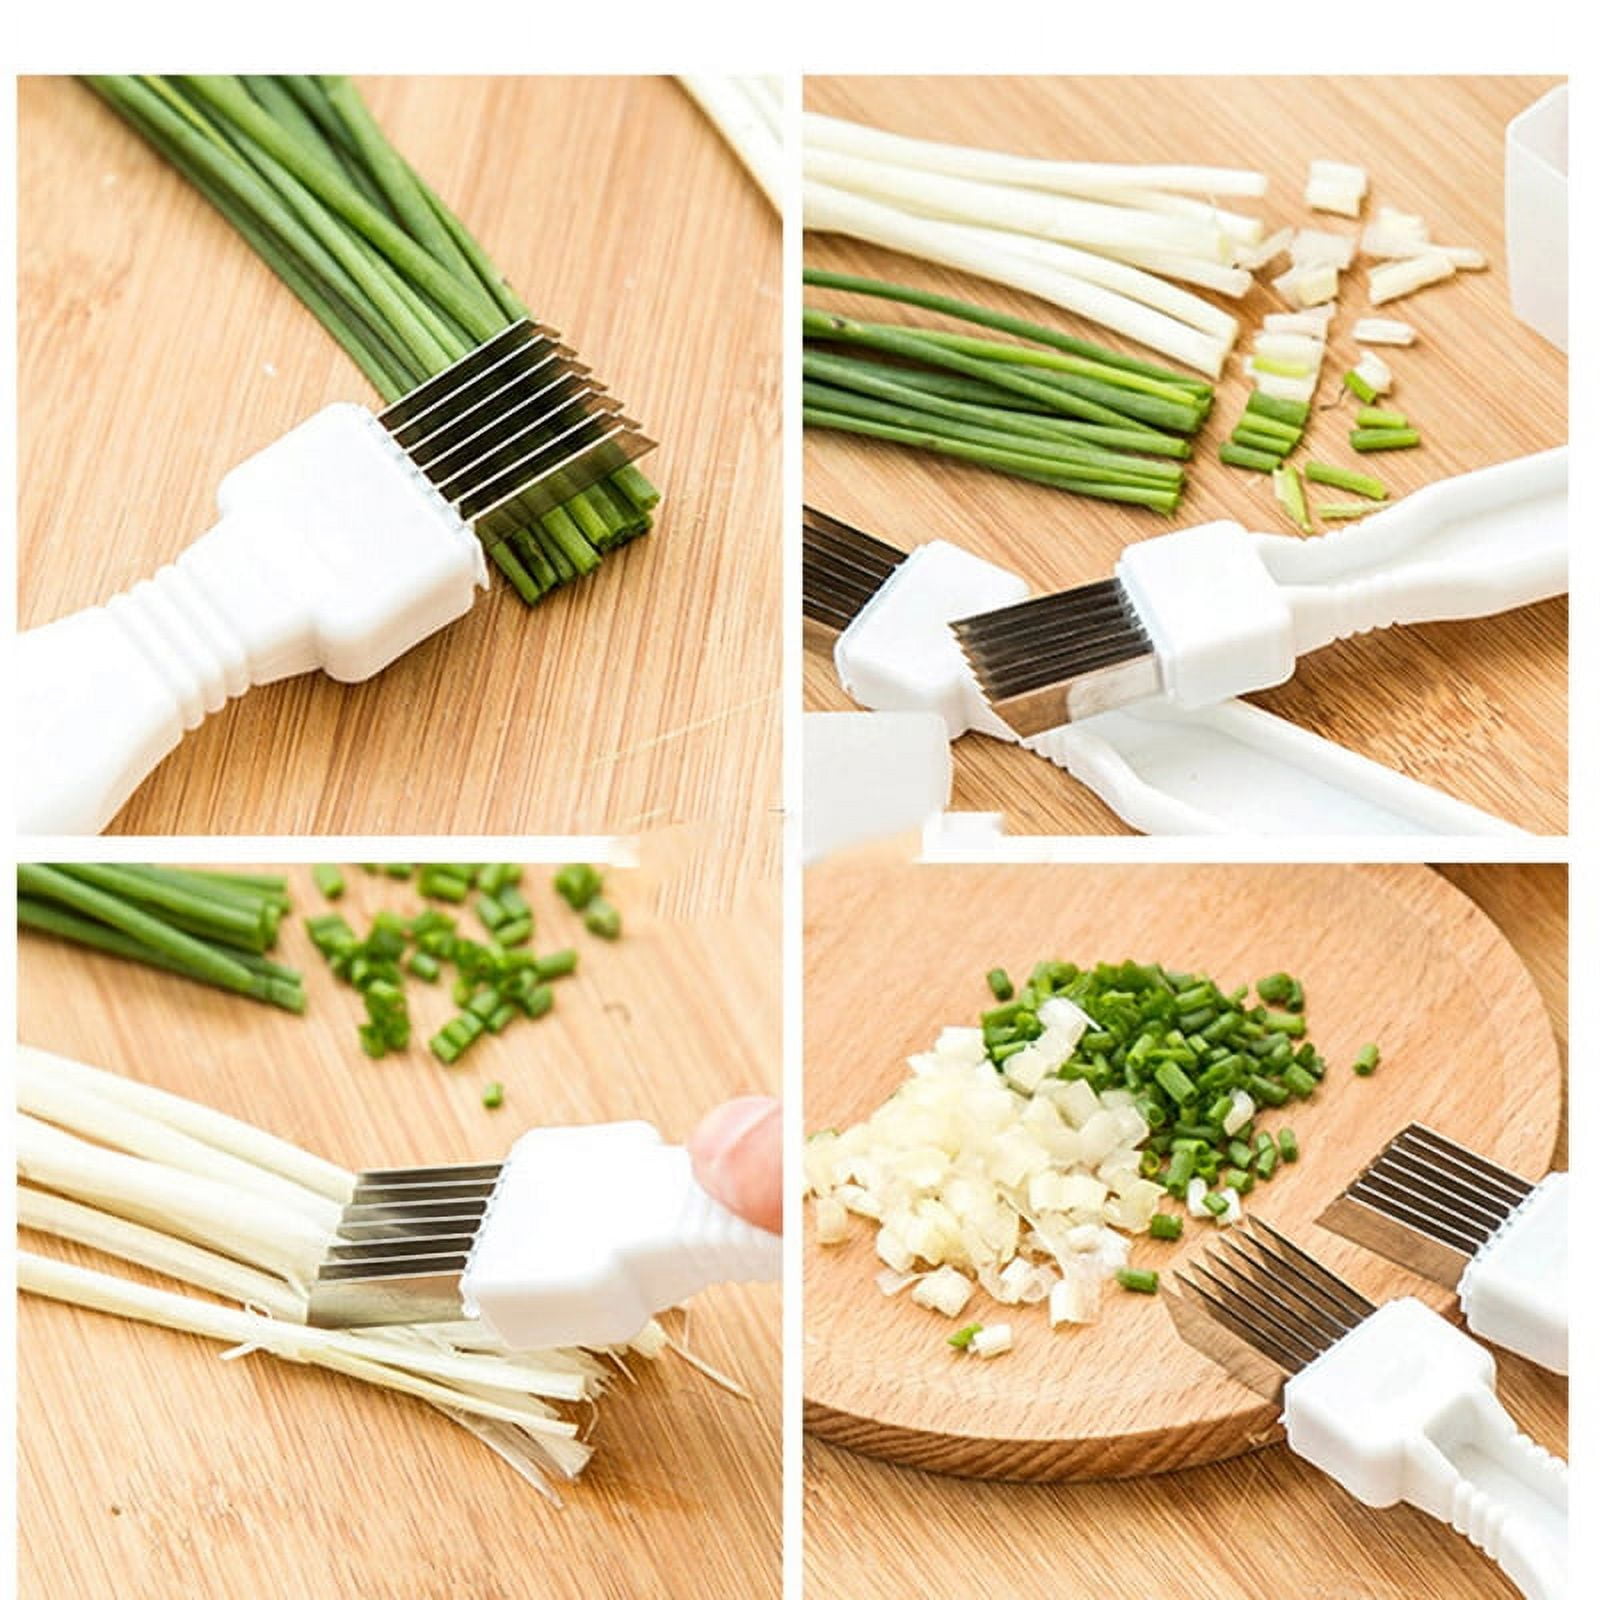 2Pcs Scallion Cutter Shred Knife, TACYKIBD Stainless Steel Vegetable Onion  Scallion Slicer Shredder, Green Onion Cutter Slicer for Kitchen Cutting